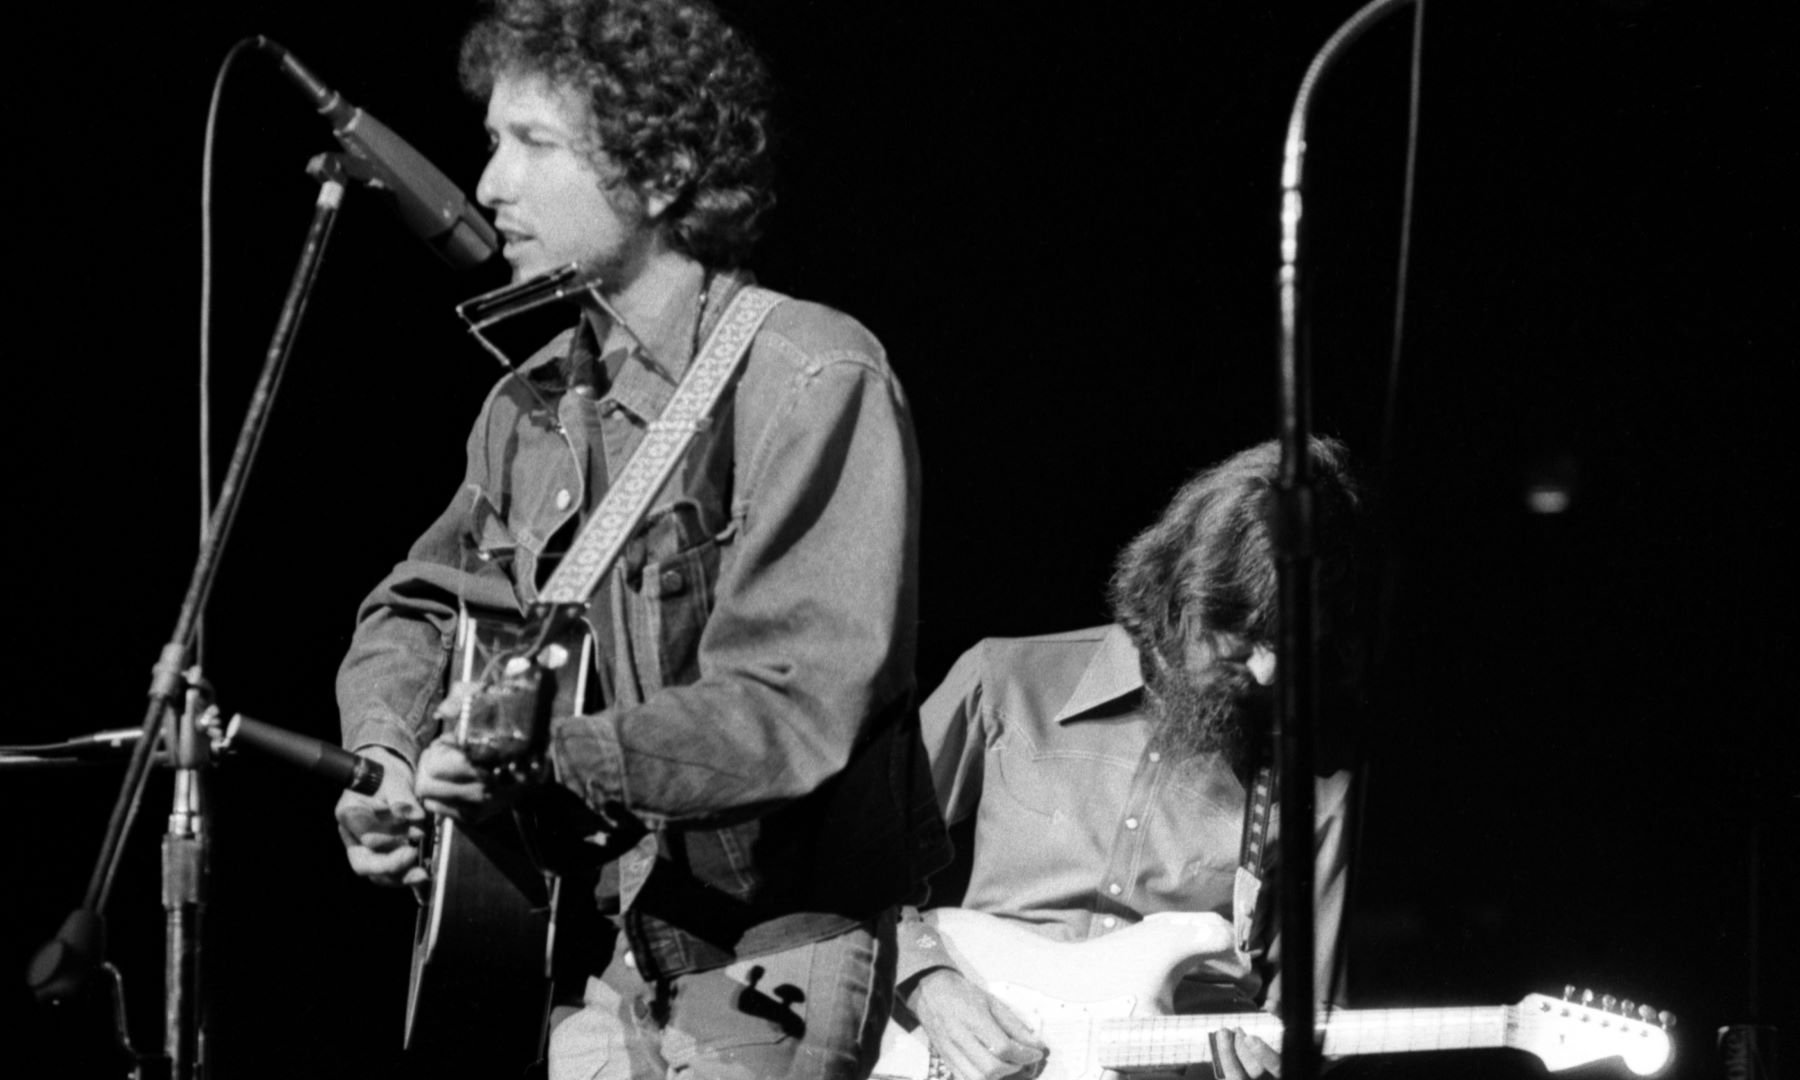 Bob Dylan performing at 'The Concert for Bangladesh' with The Beatles and Ravi Shankar